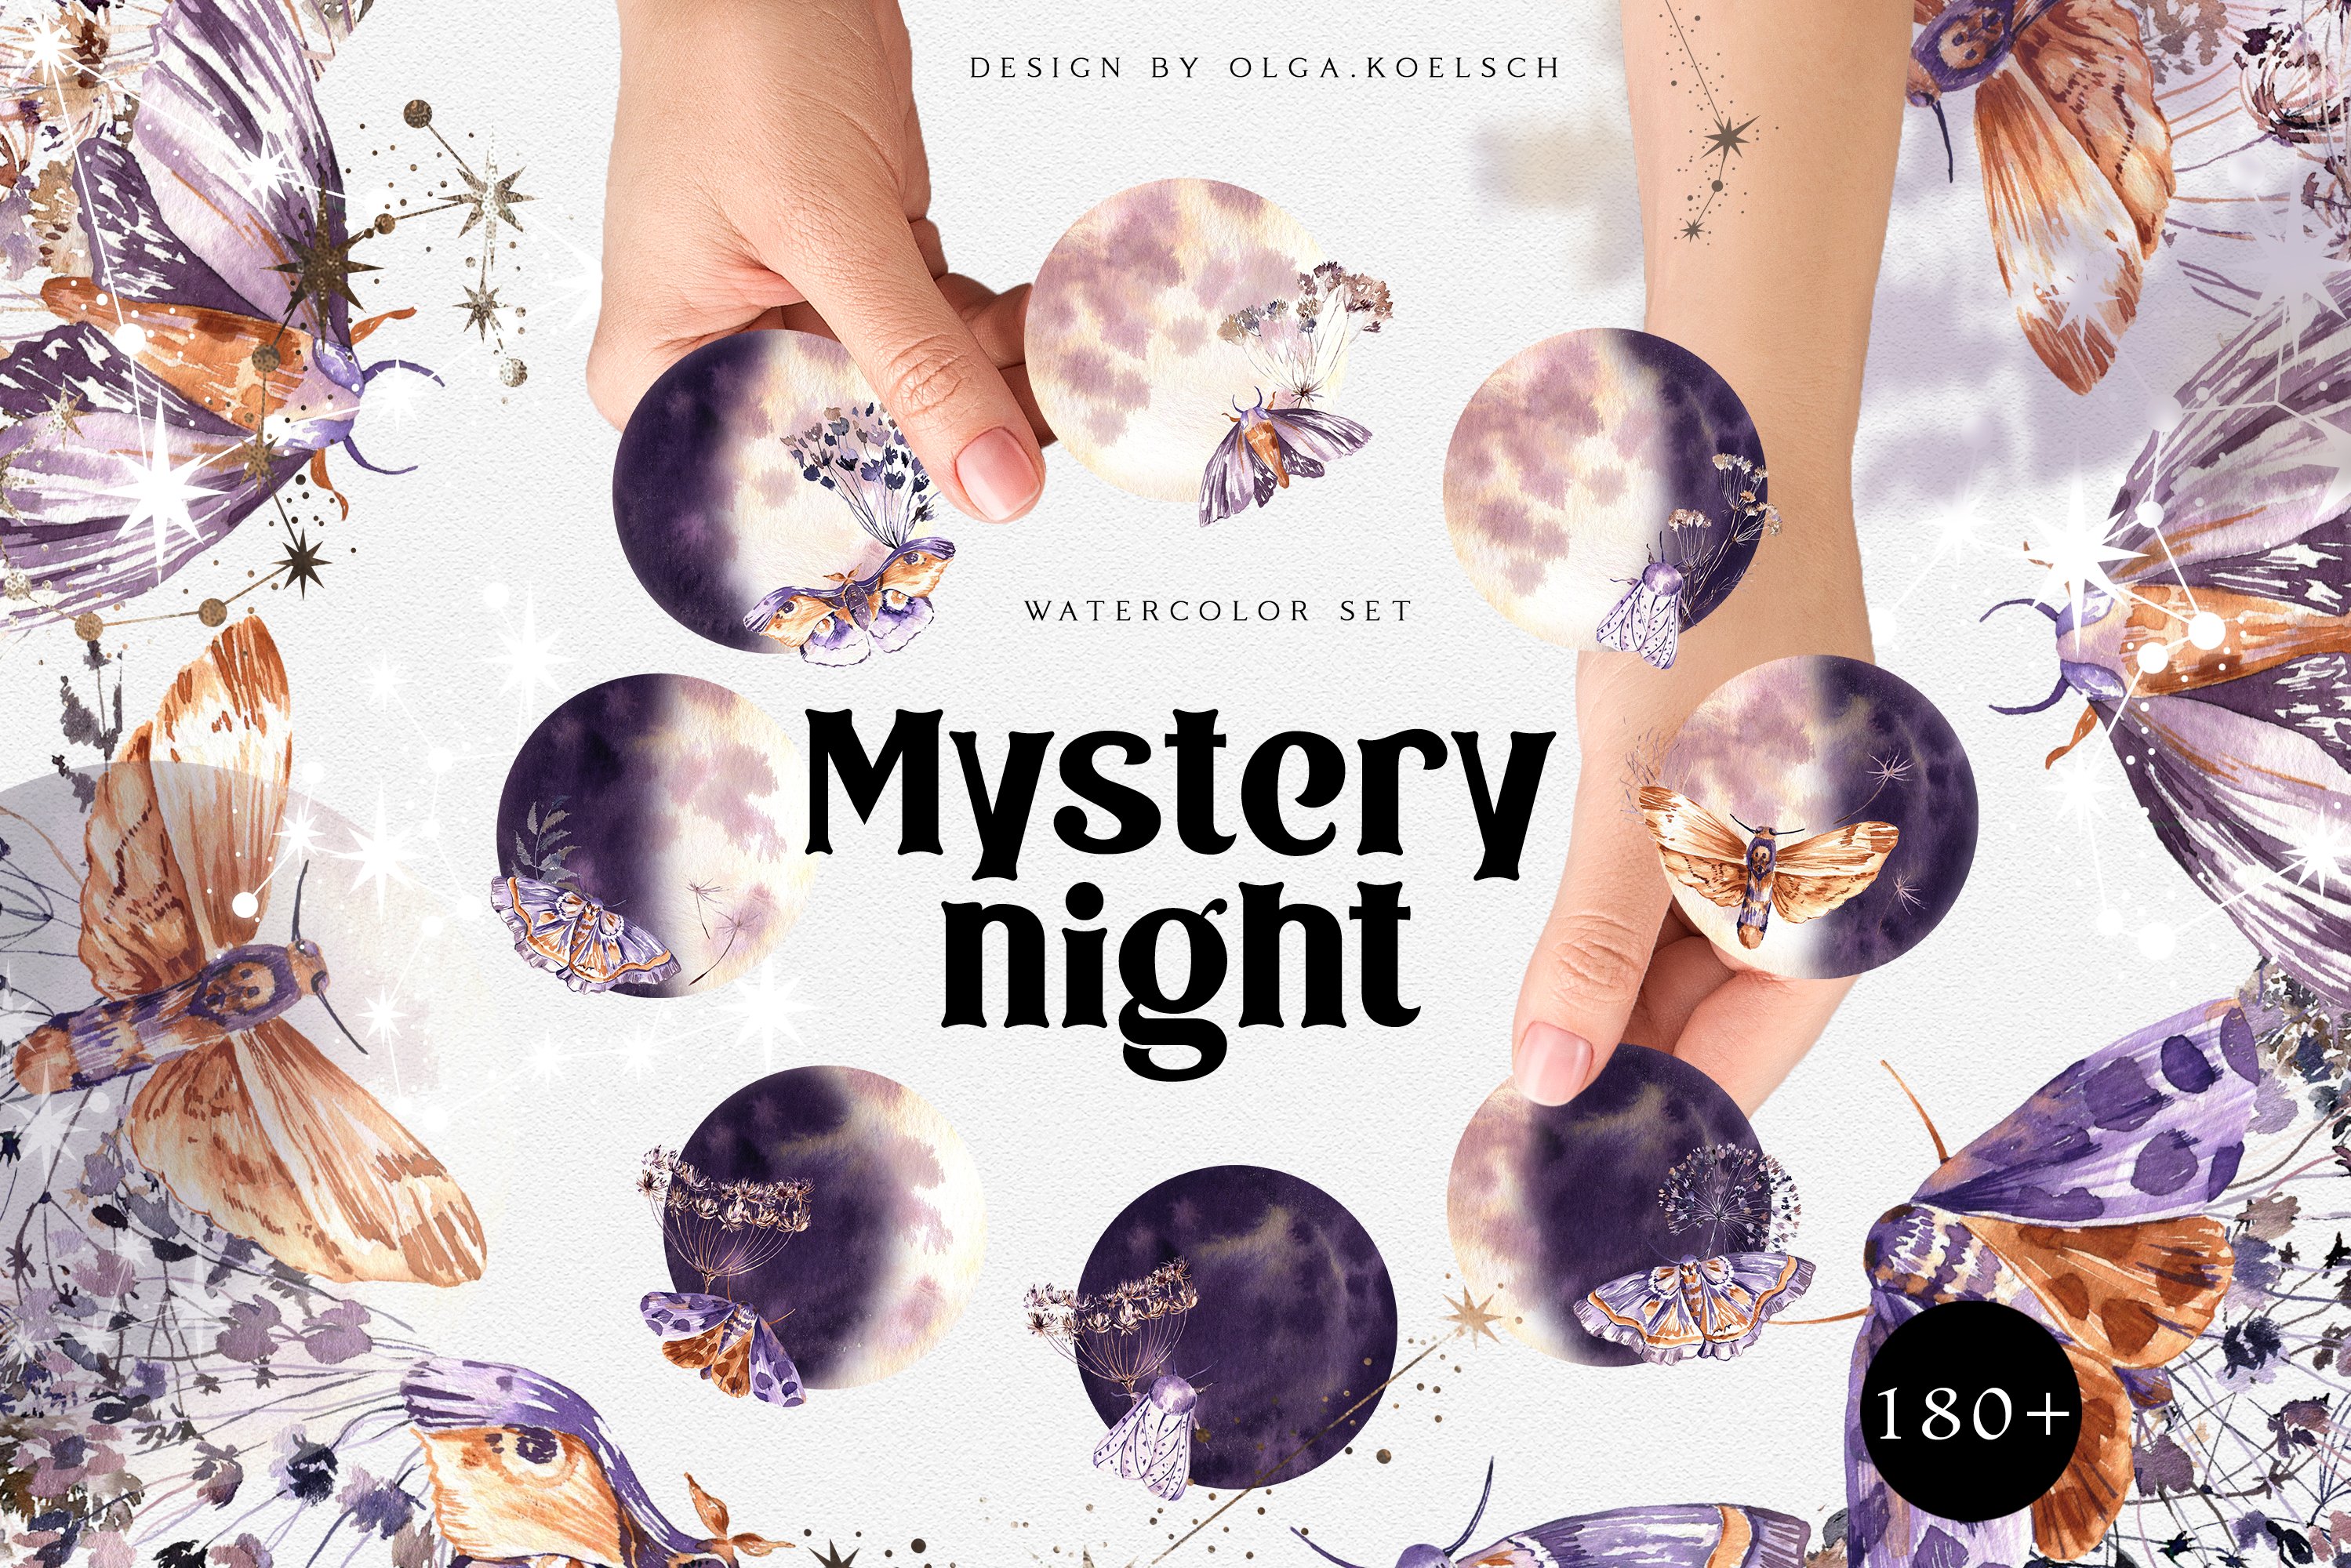 Mystery Night Zodiac cover image.